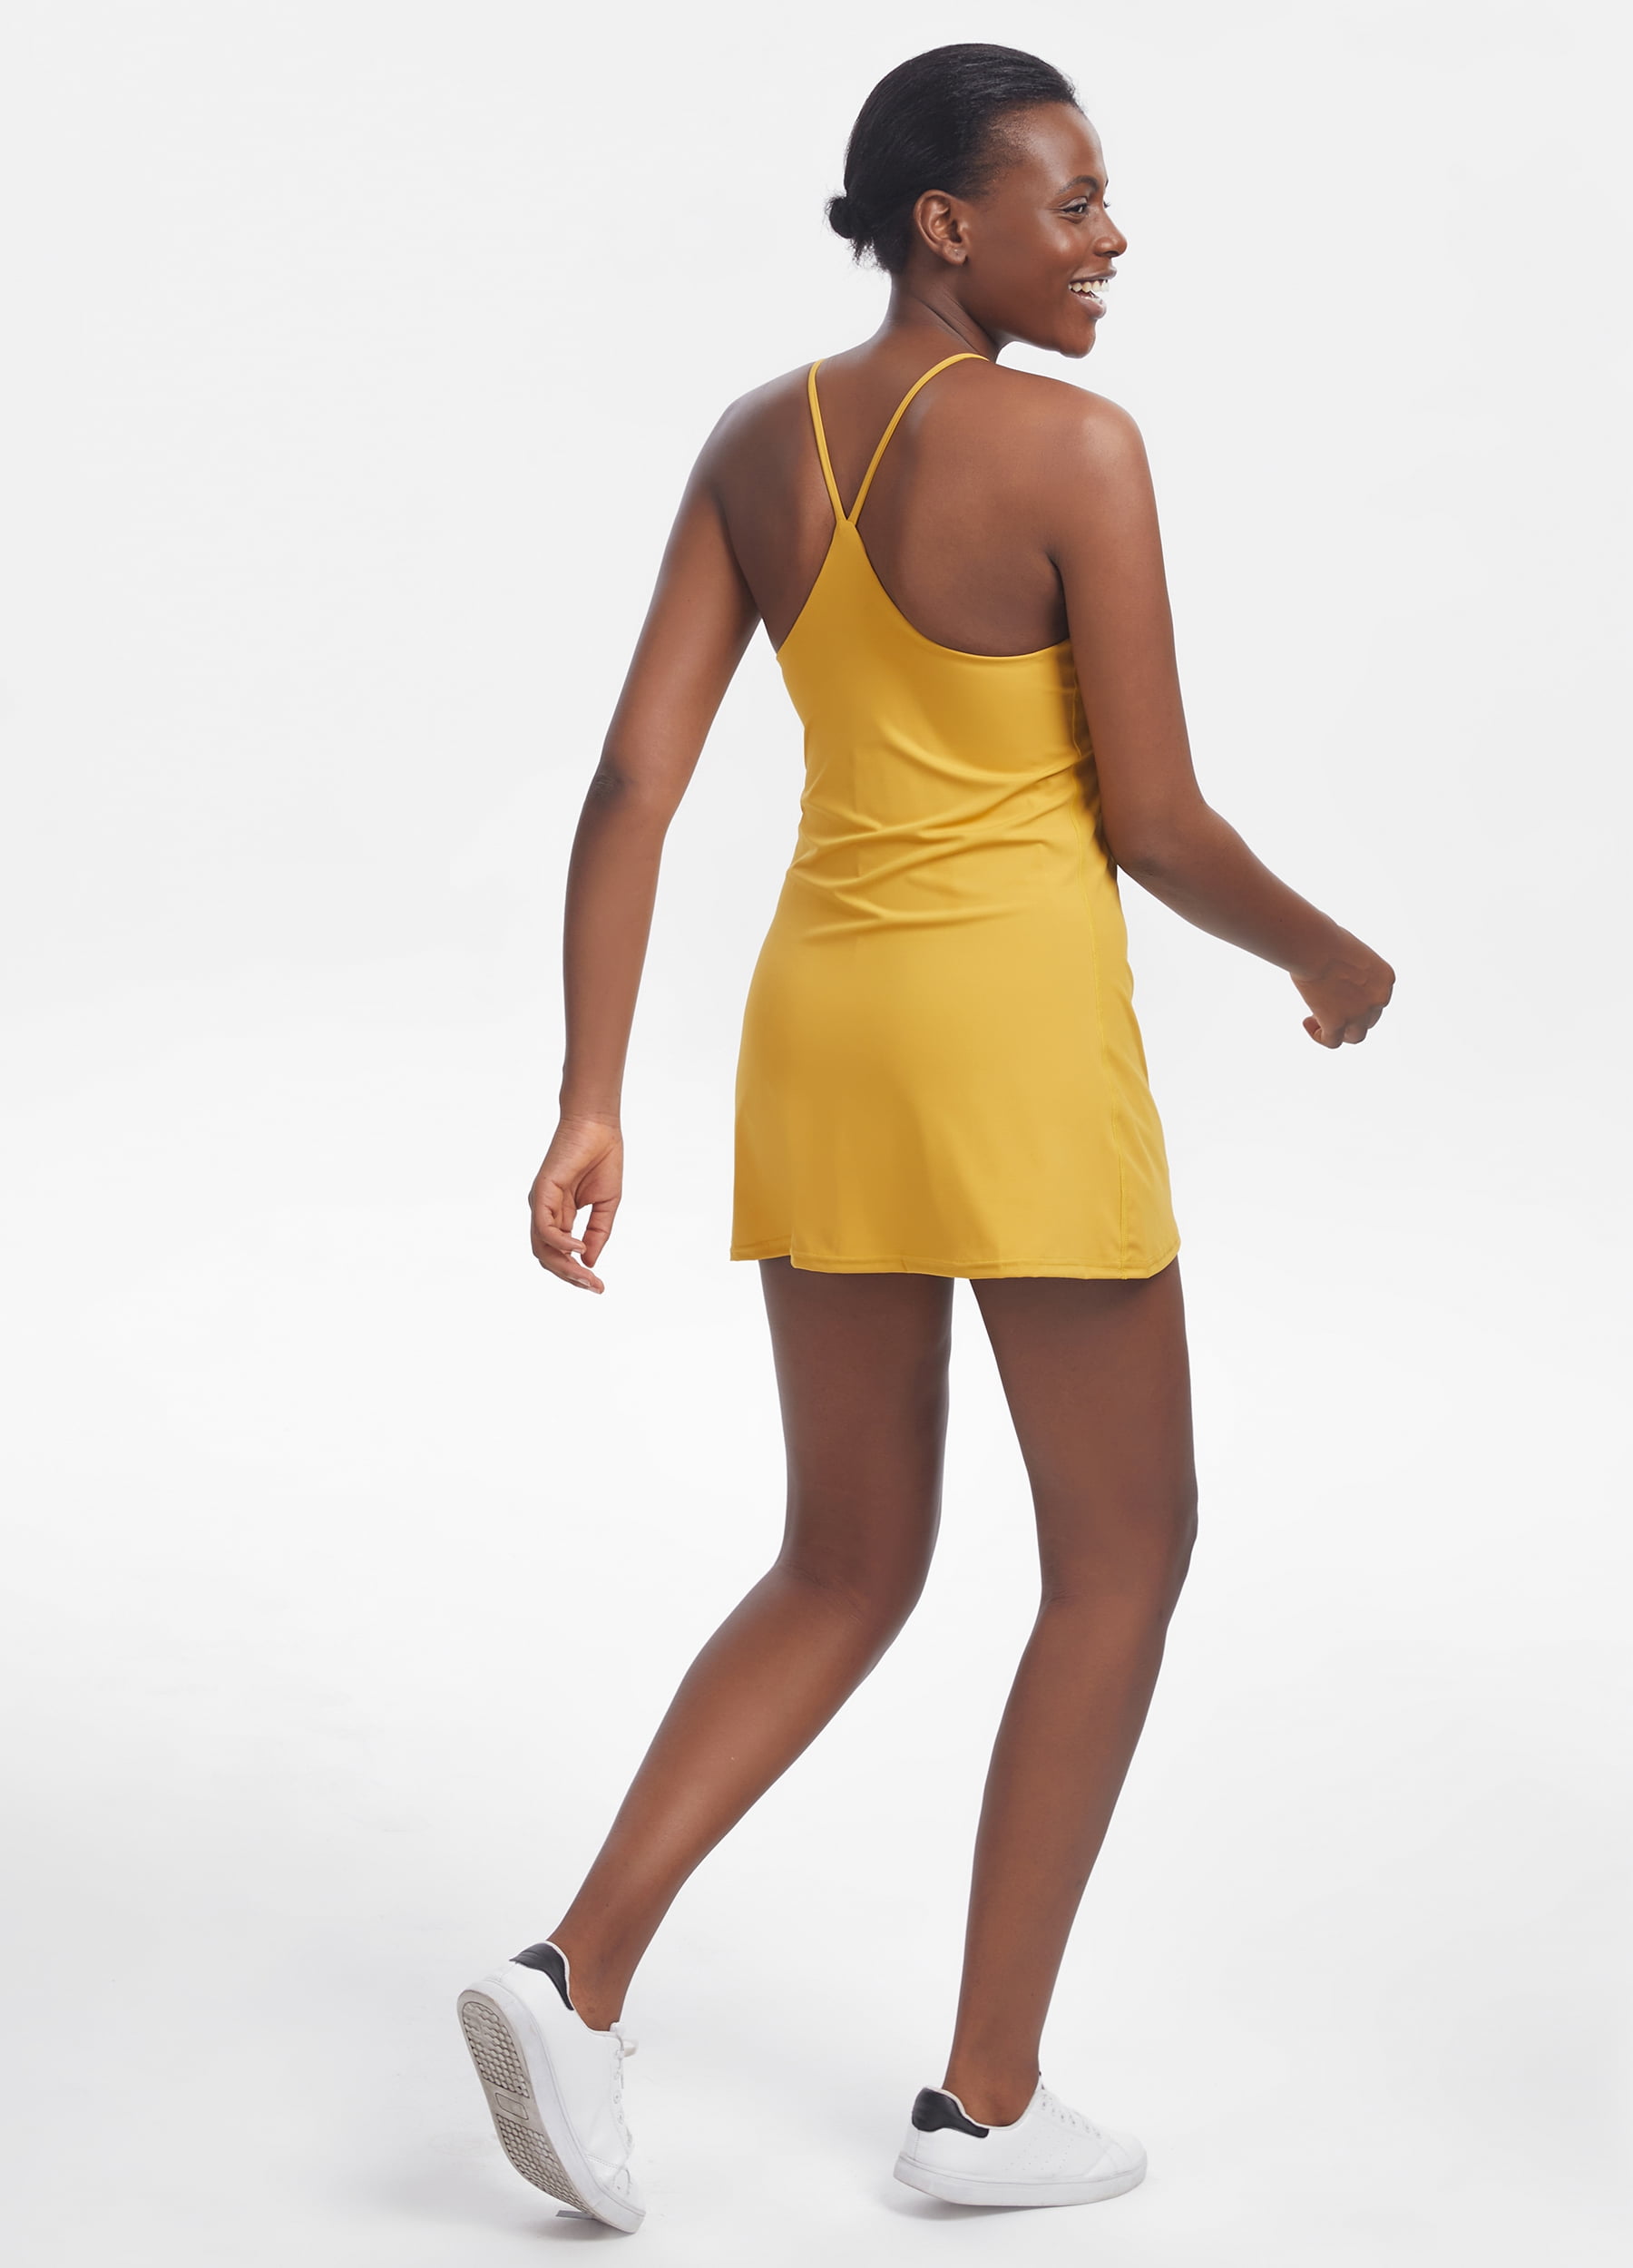 KUACUA Women's Sleeveless Workout Dress, Built-in Bra & Shorts with  Pockets, Athletic Dress for Golf Sportswear Tennis Dress Yellow 